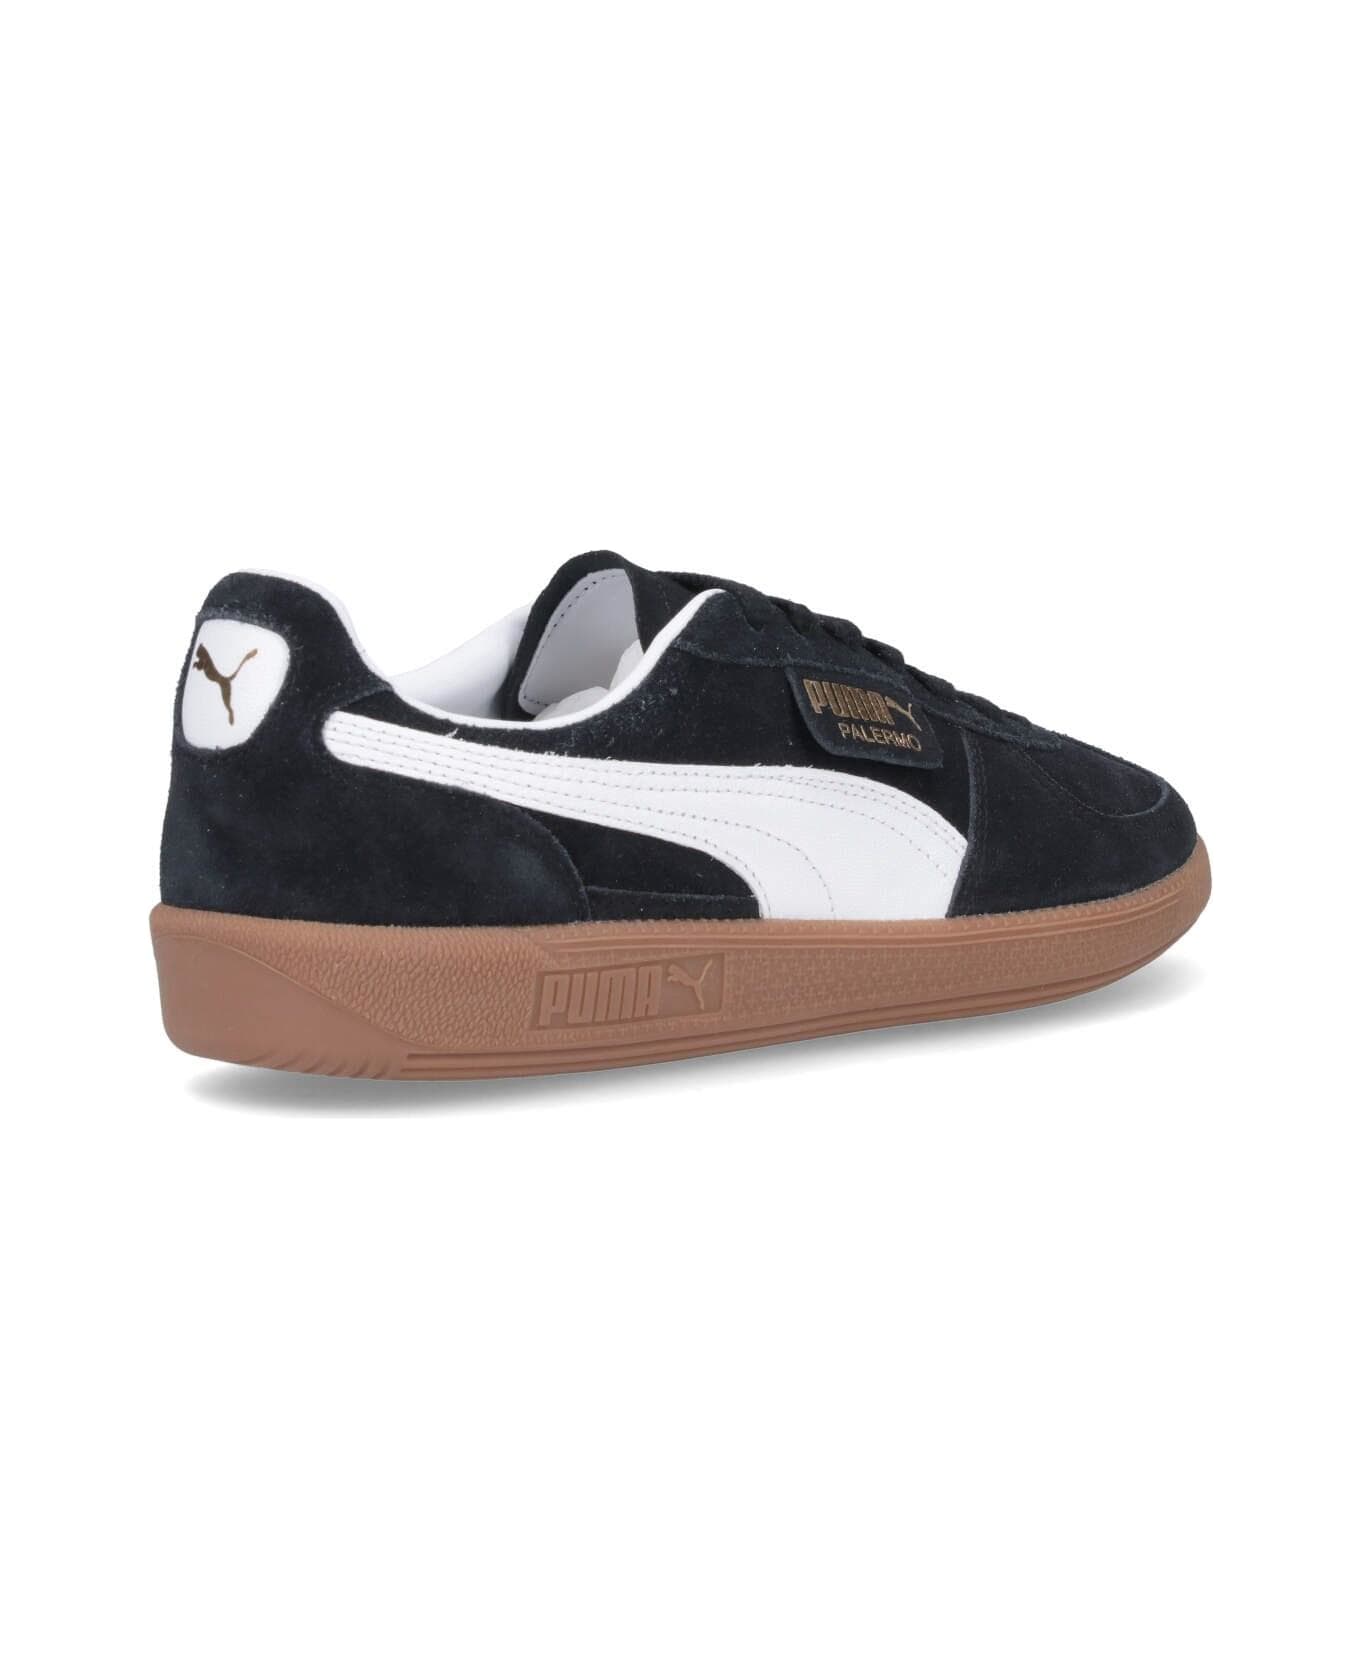 Puma 'palermo' Sneakers - Black スニーカー